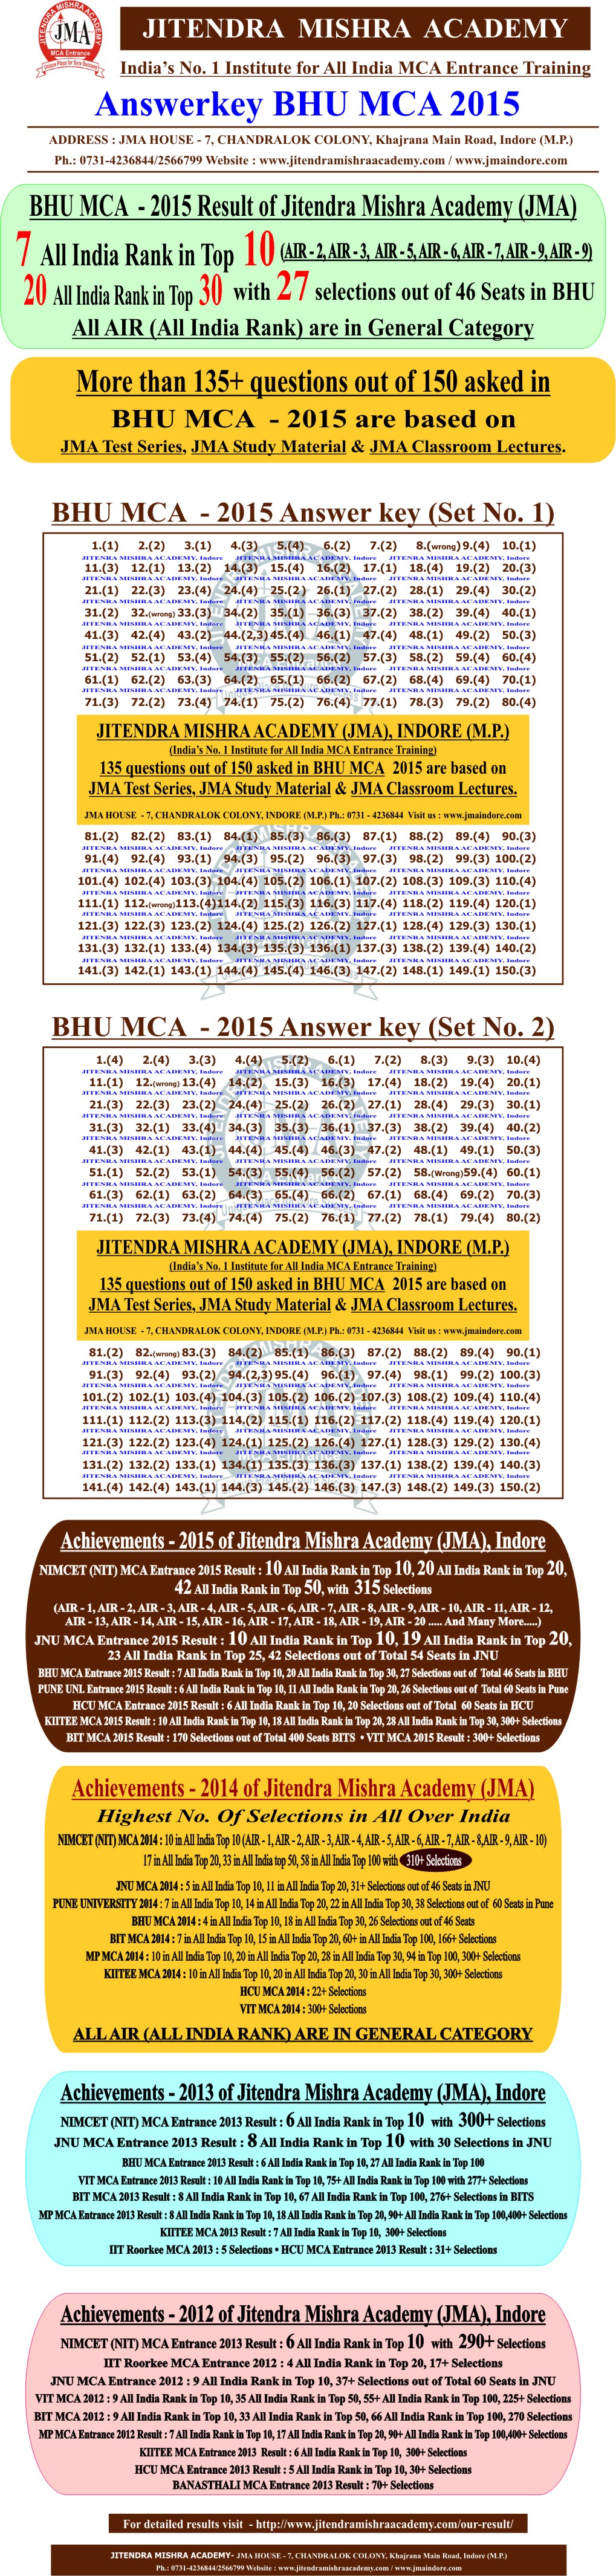 BHU - 2015 answerkey(1)